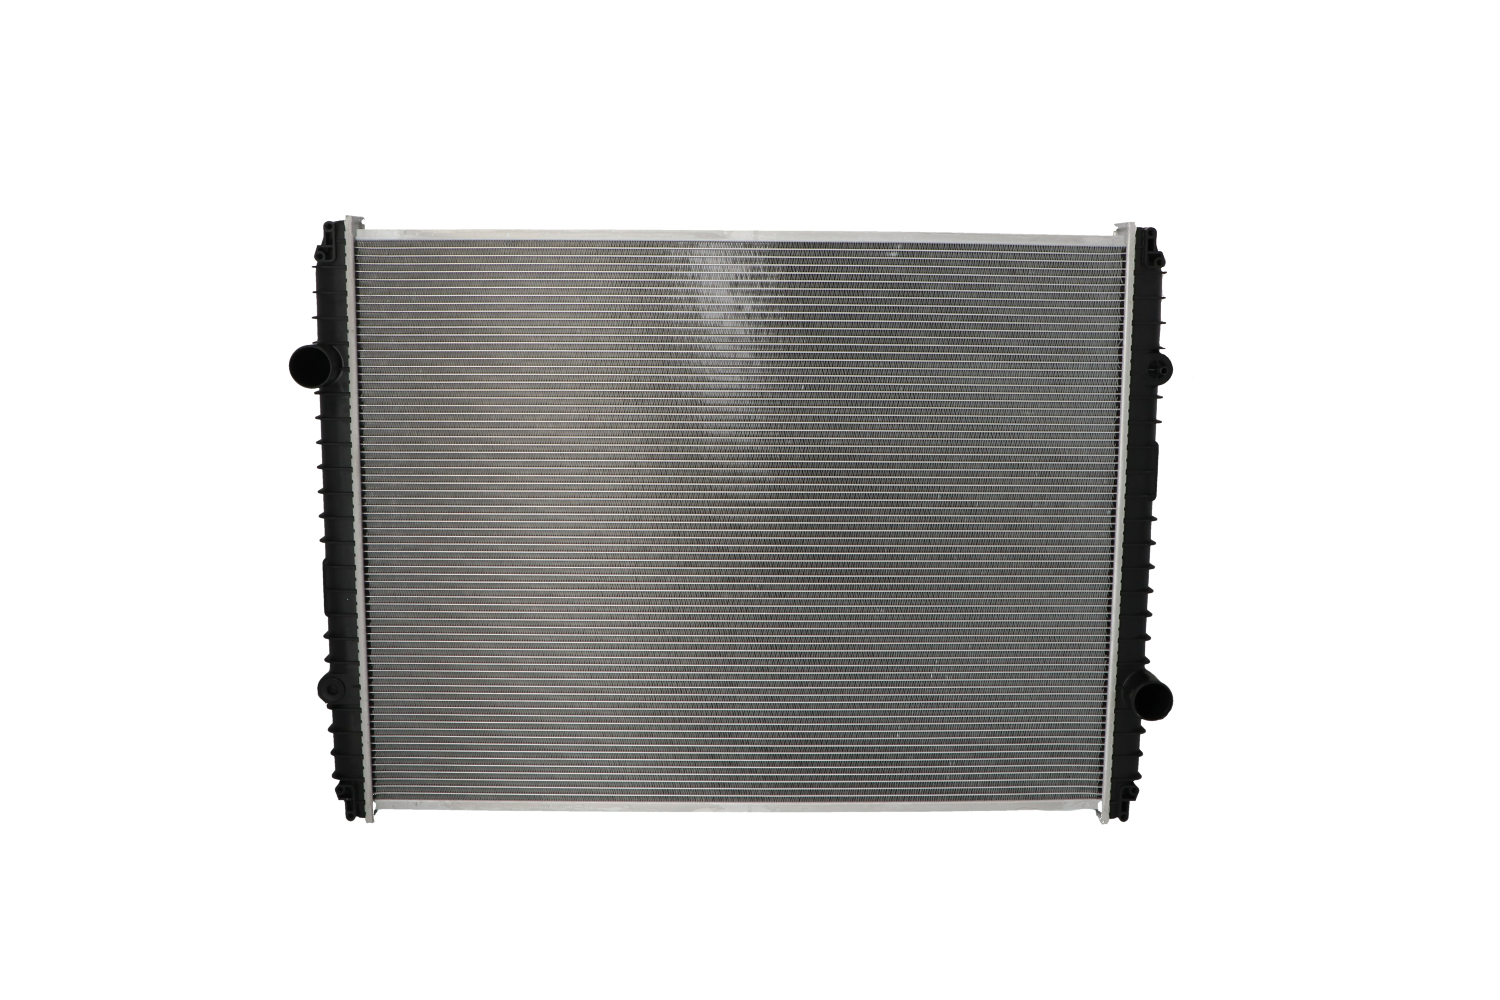 NRF Aluminium, 915 x 722 x 43 mm, without frame, Brazed cooling fins Radiator 509707 buy